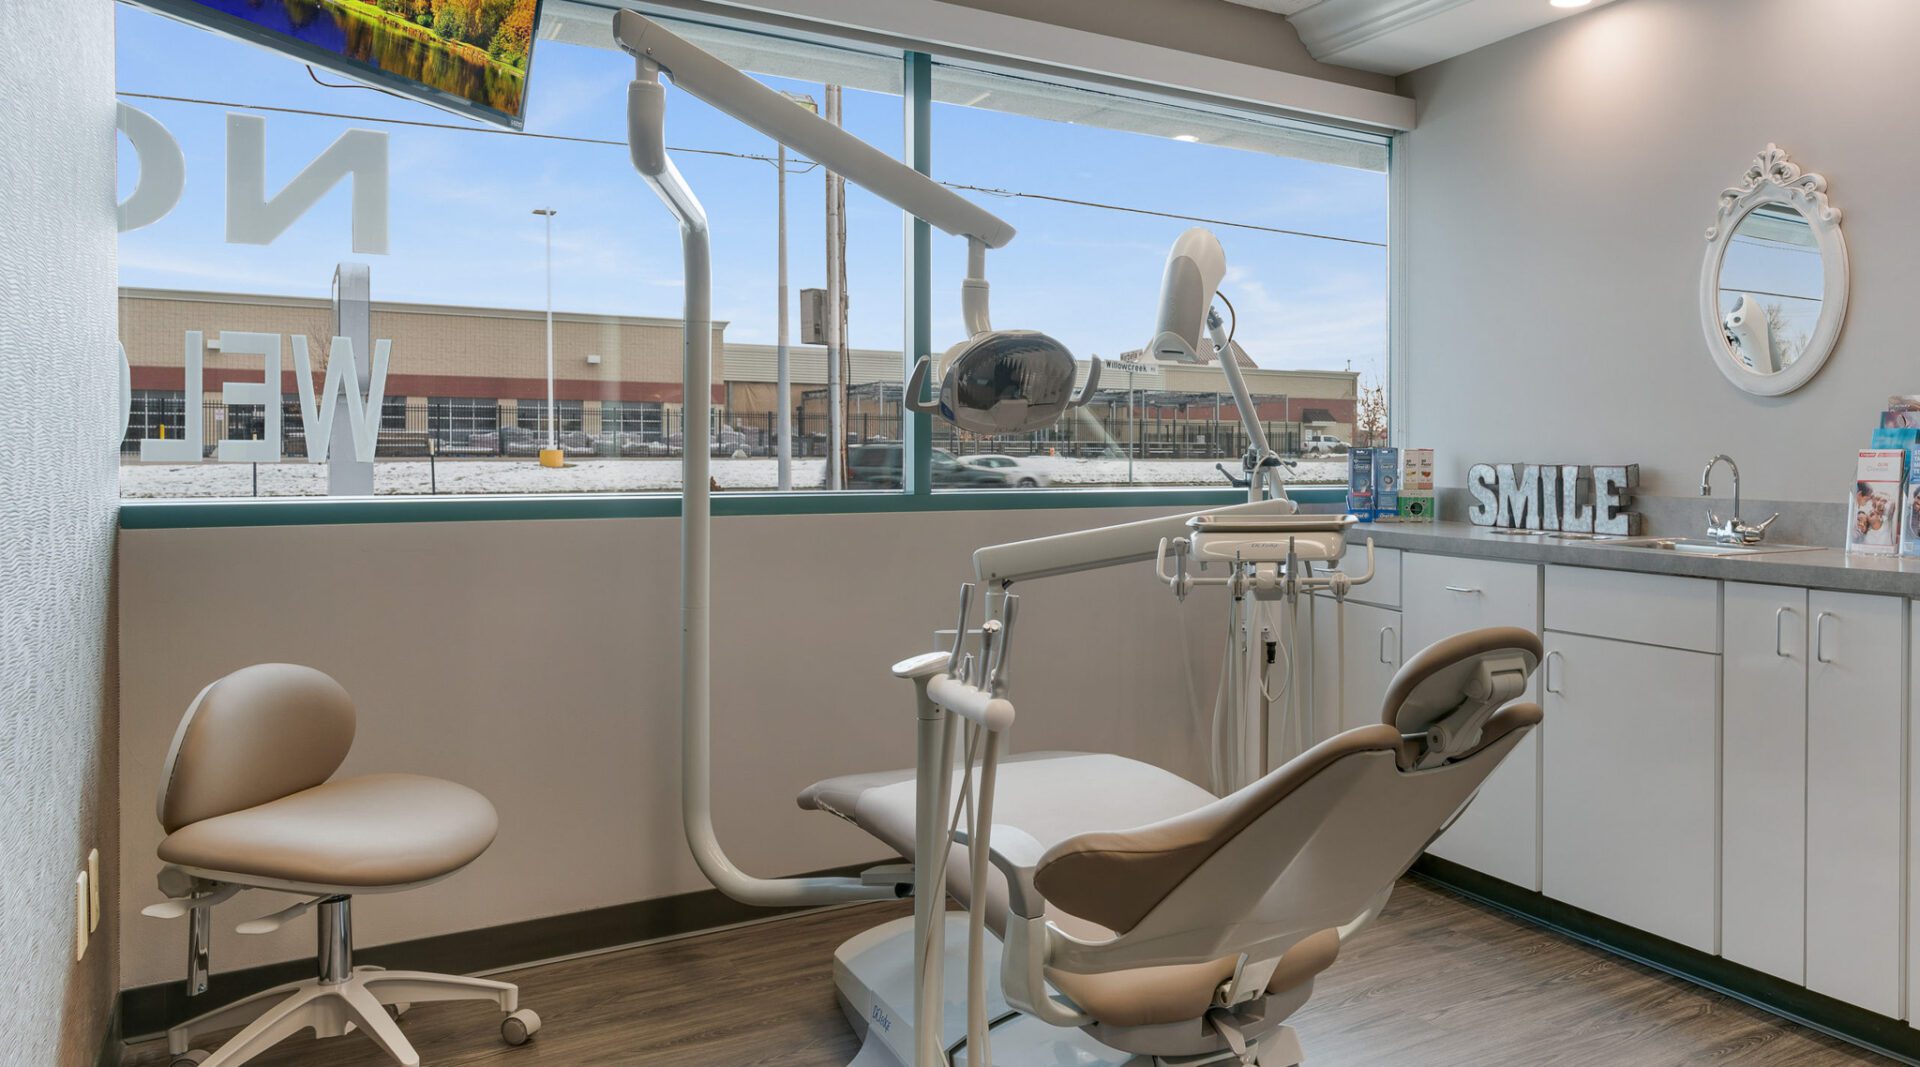 Dental exam room with large window.